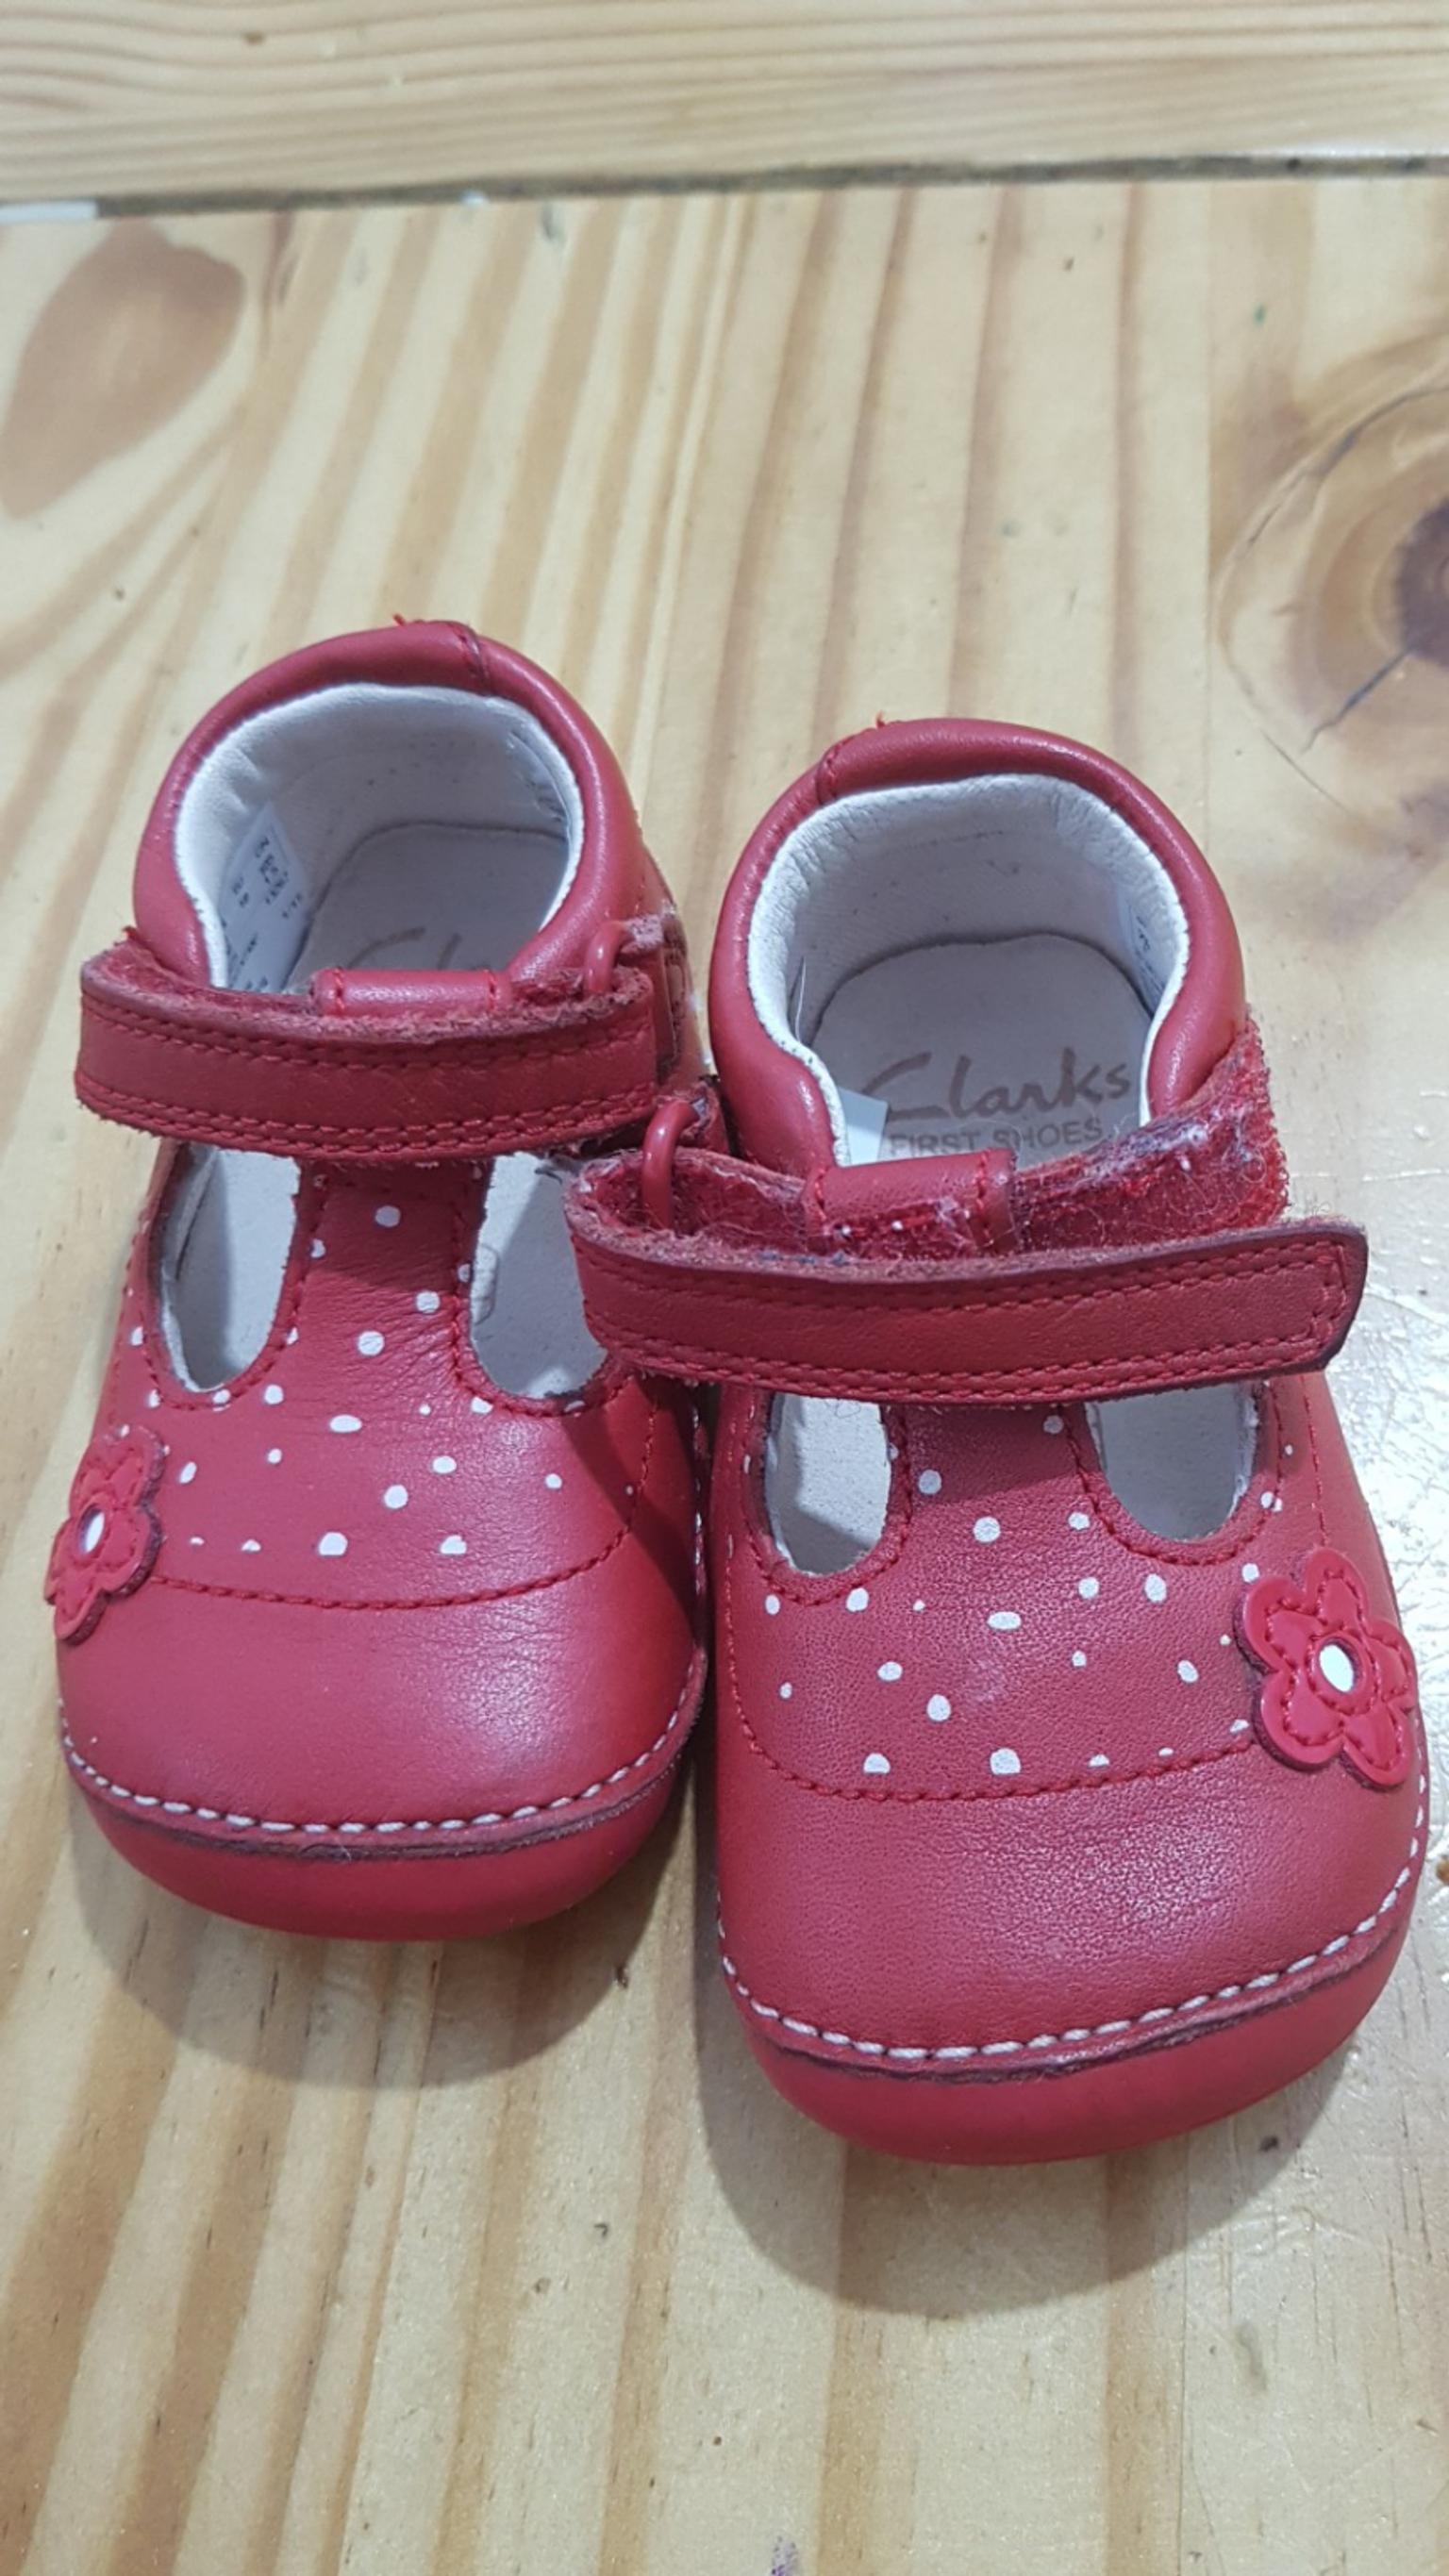 Clarks Baby Shoes Sale Greece, SAVE 45% - motorhomevoyager.co.uk